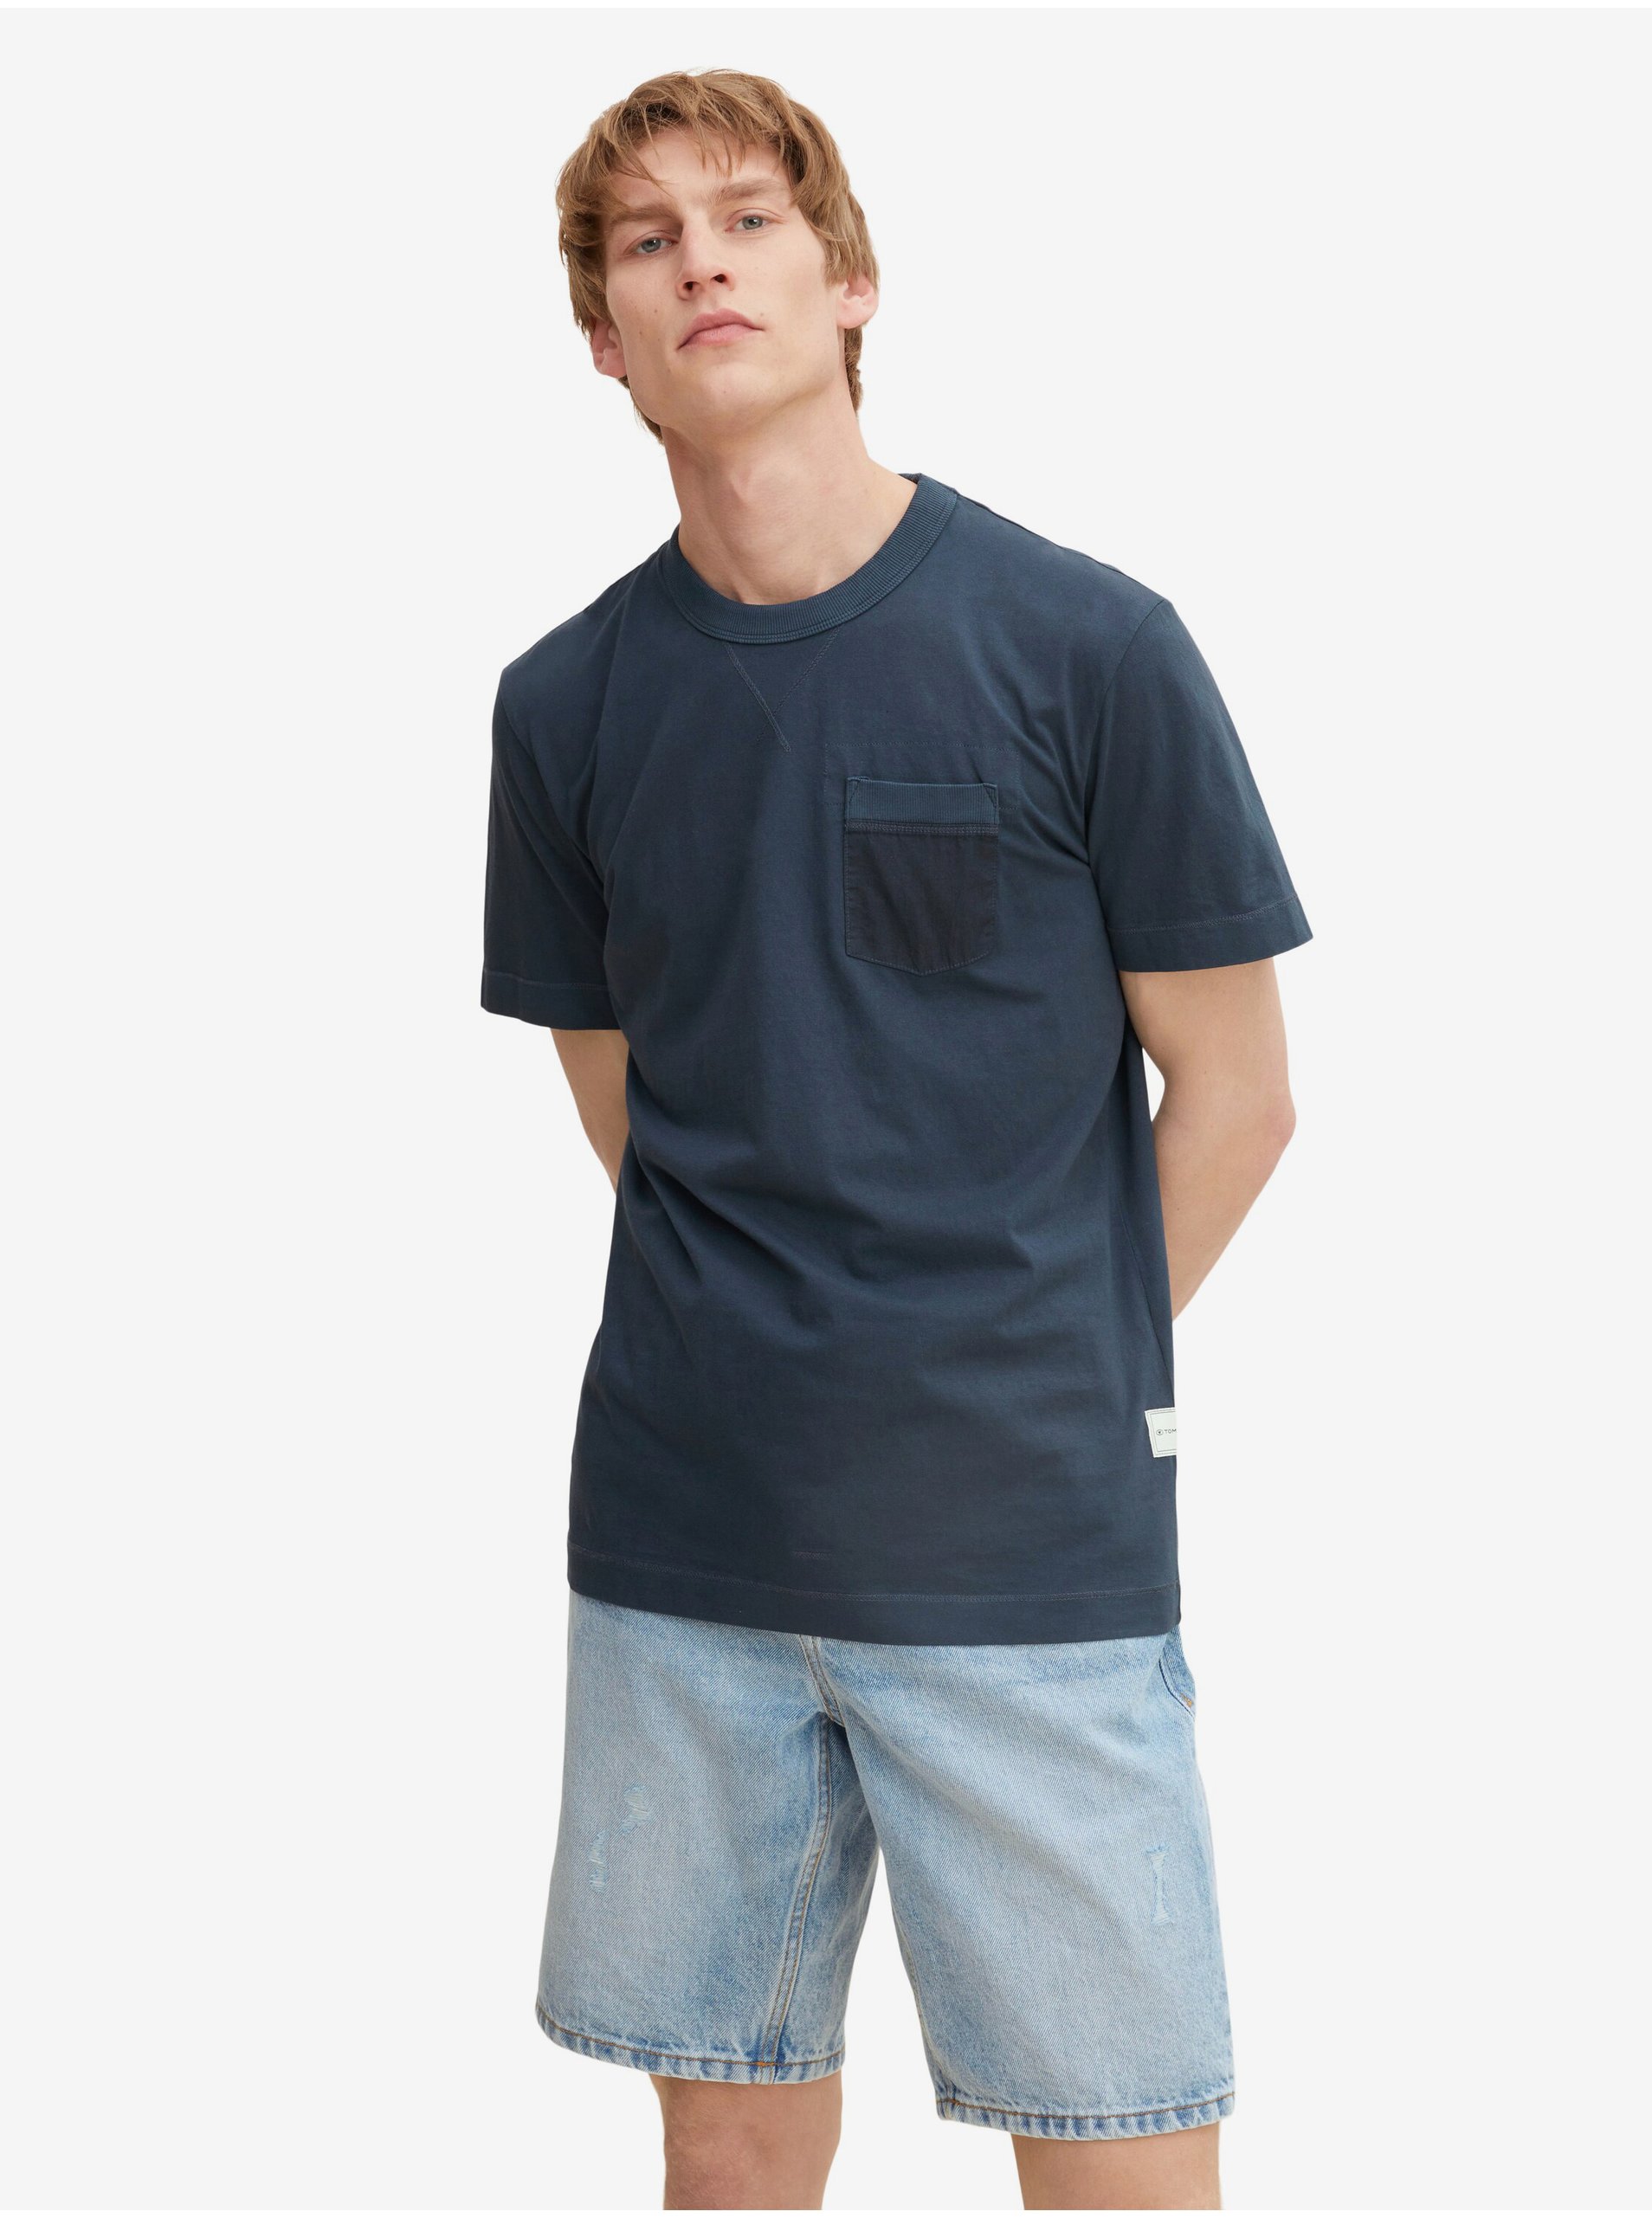 Dark blue mens basic T-shirt with pocket Tom Tailor - Men